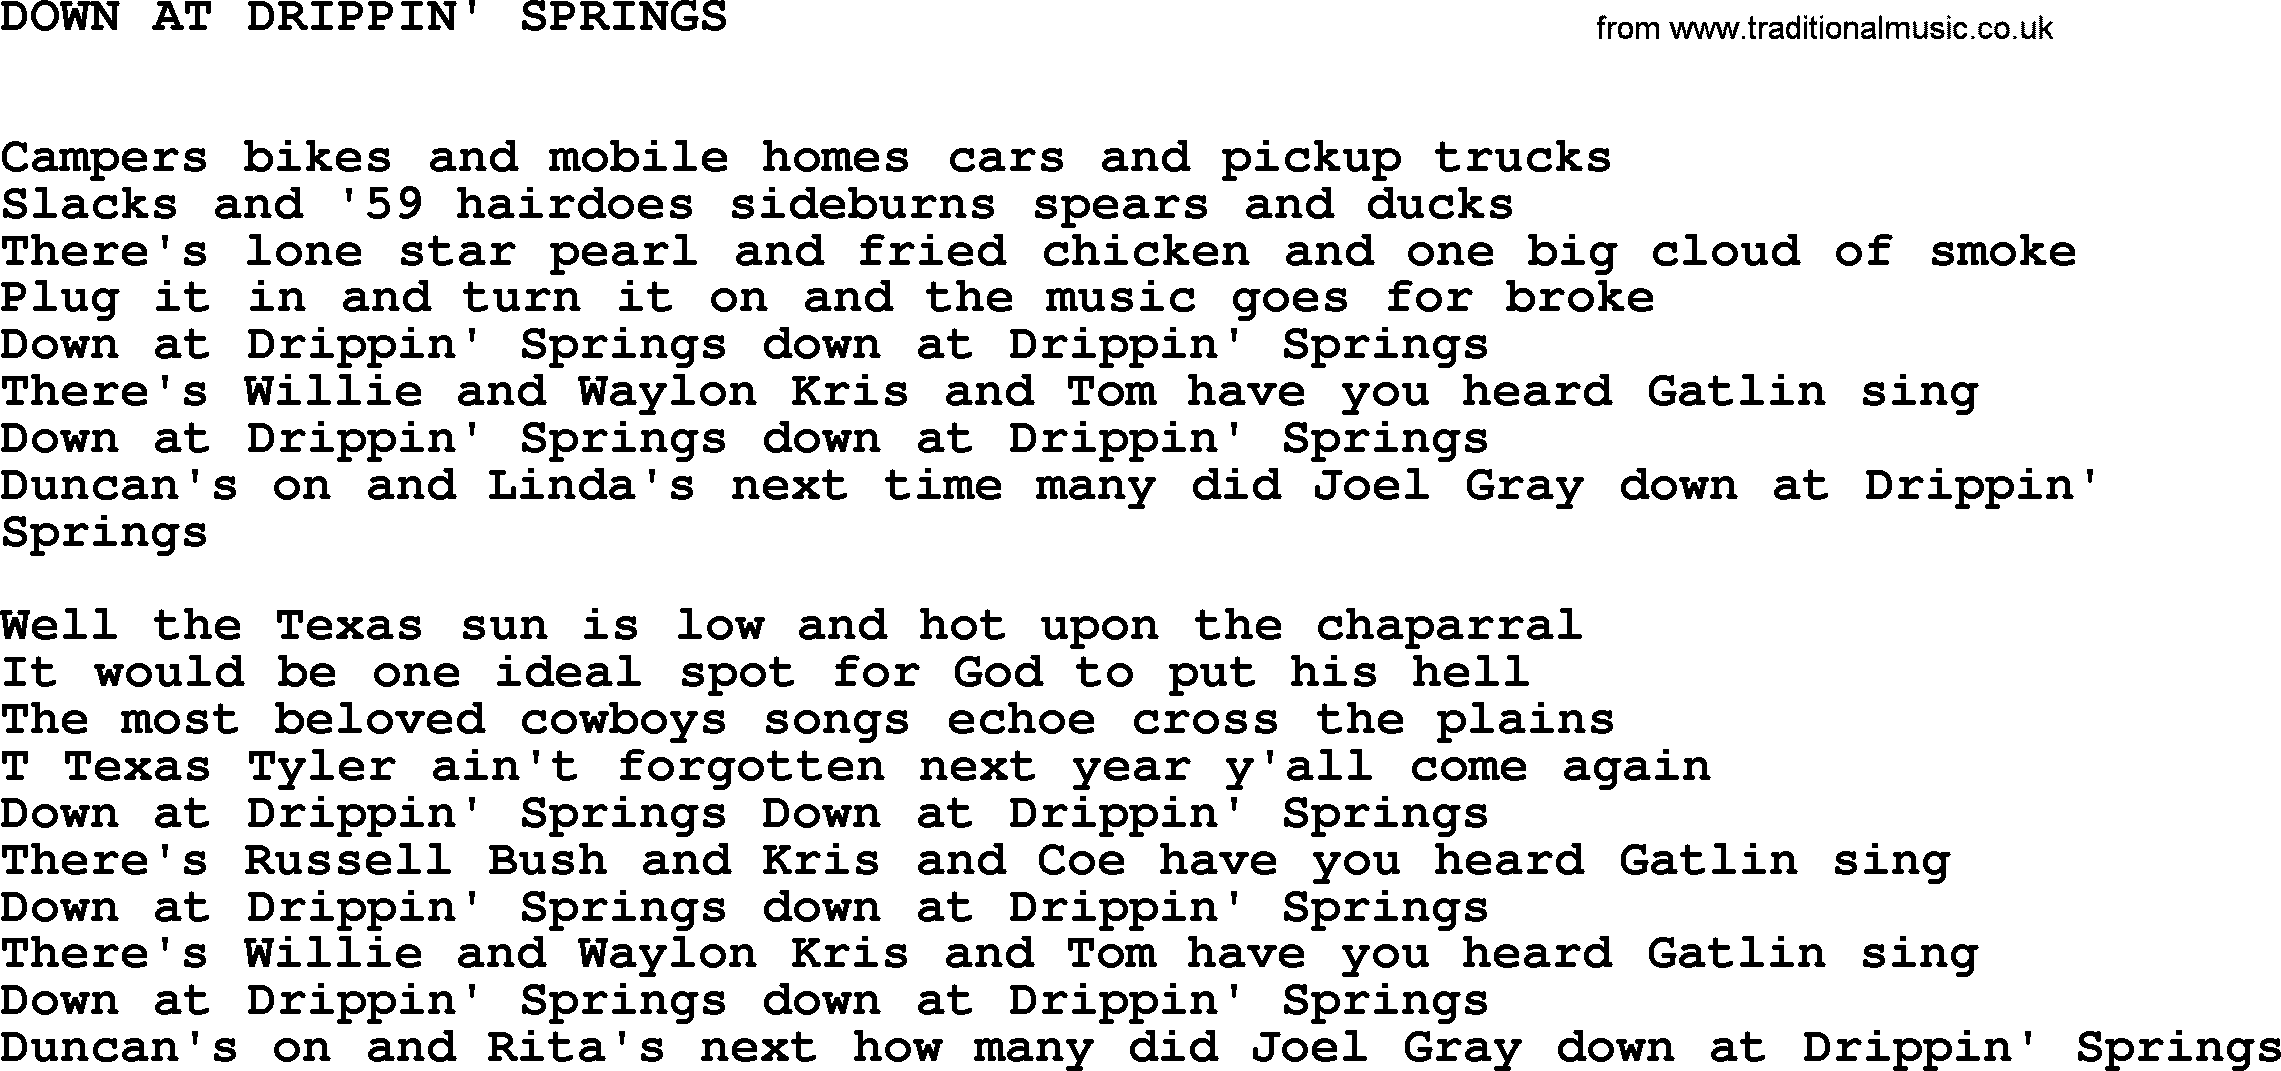 Johnny Cash song Down At Drippin' Springs.txt lyrics